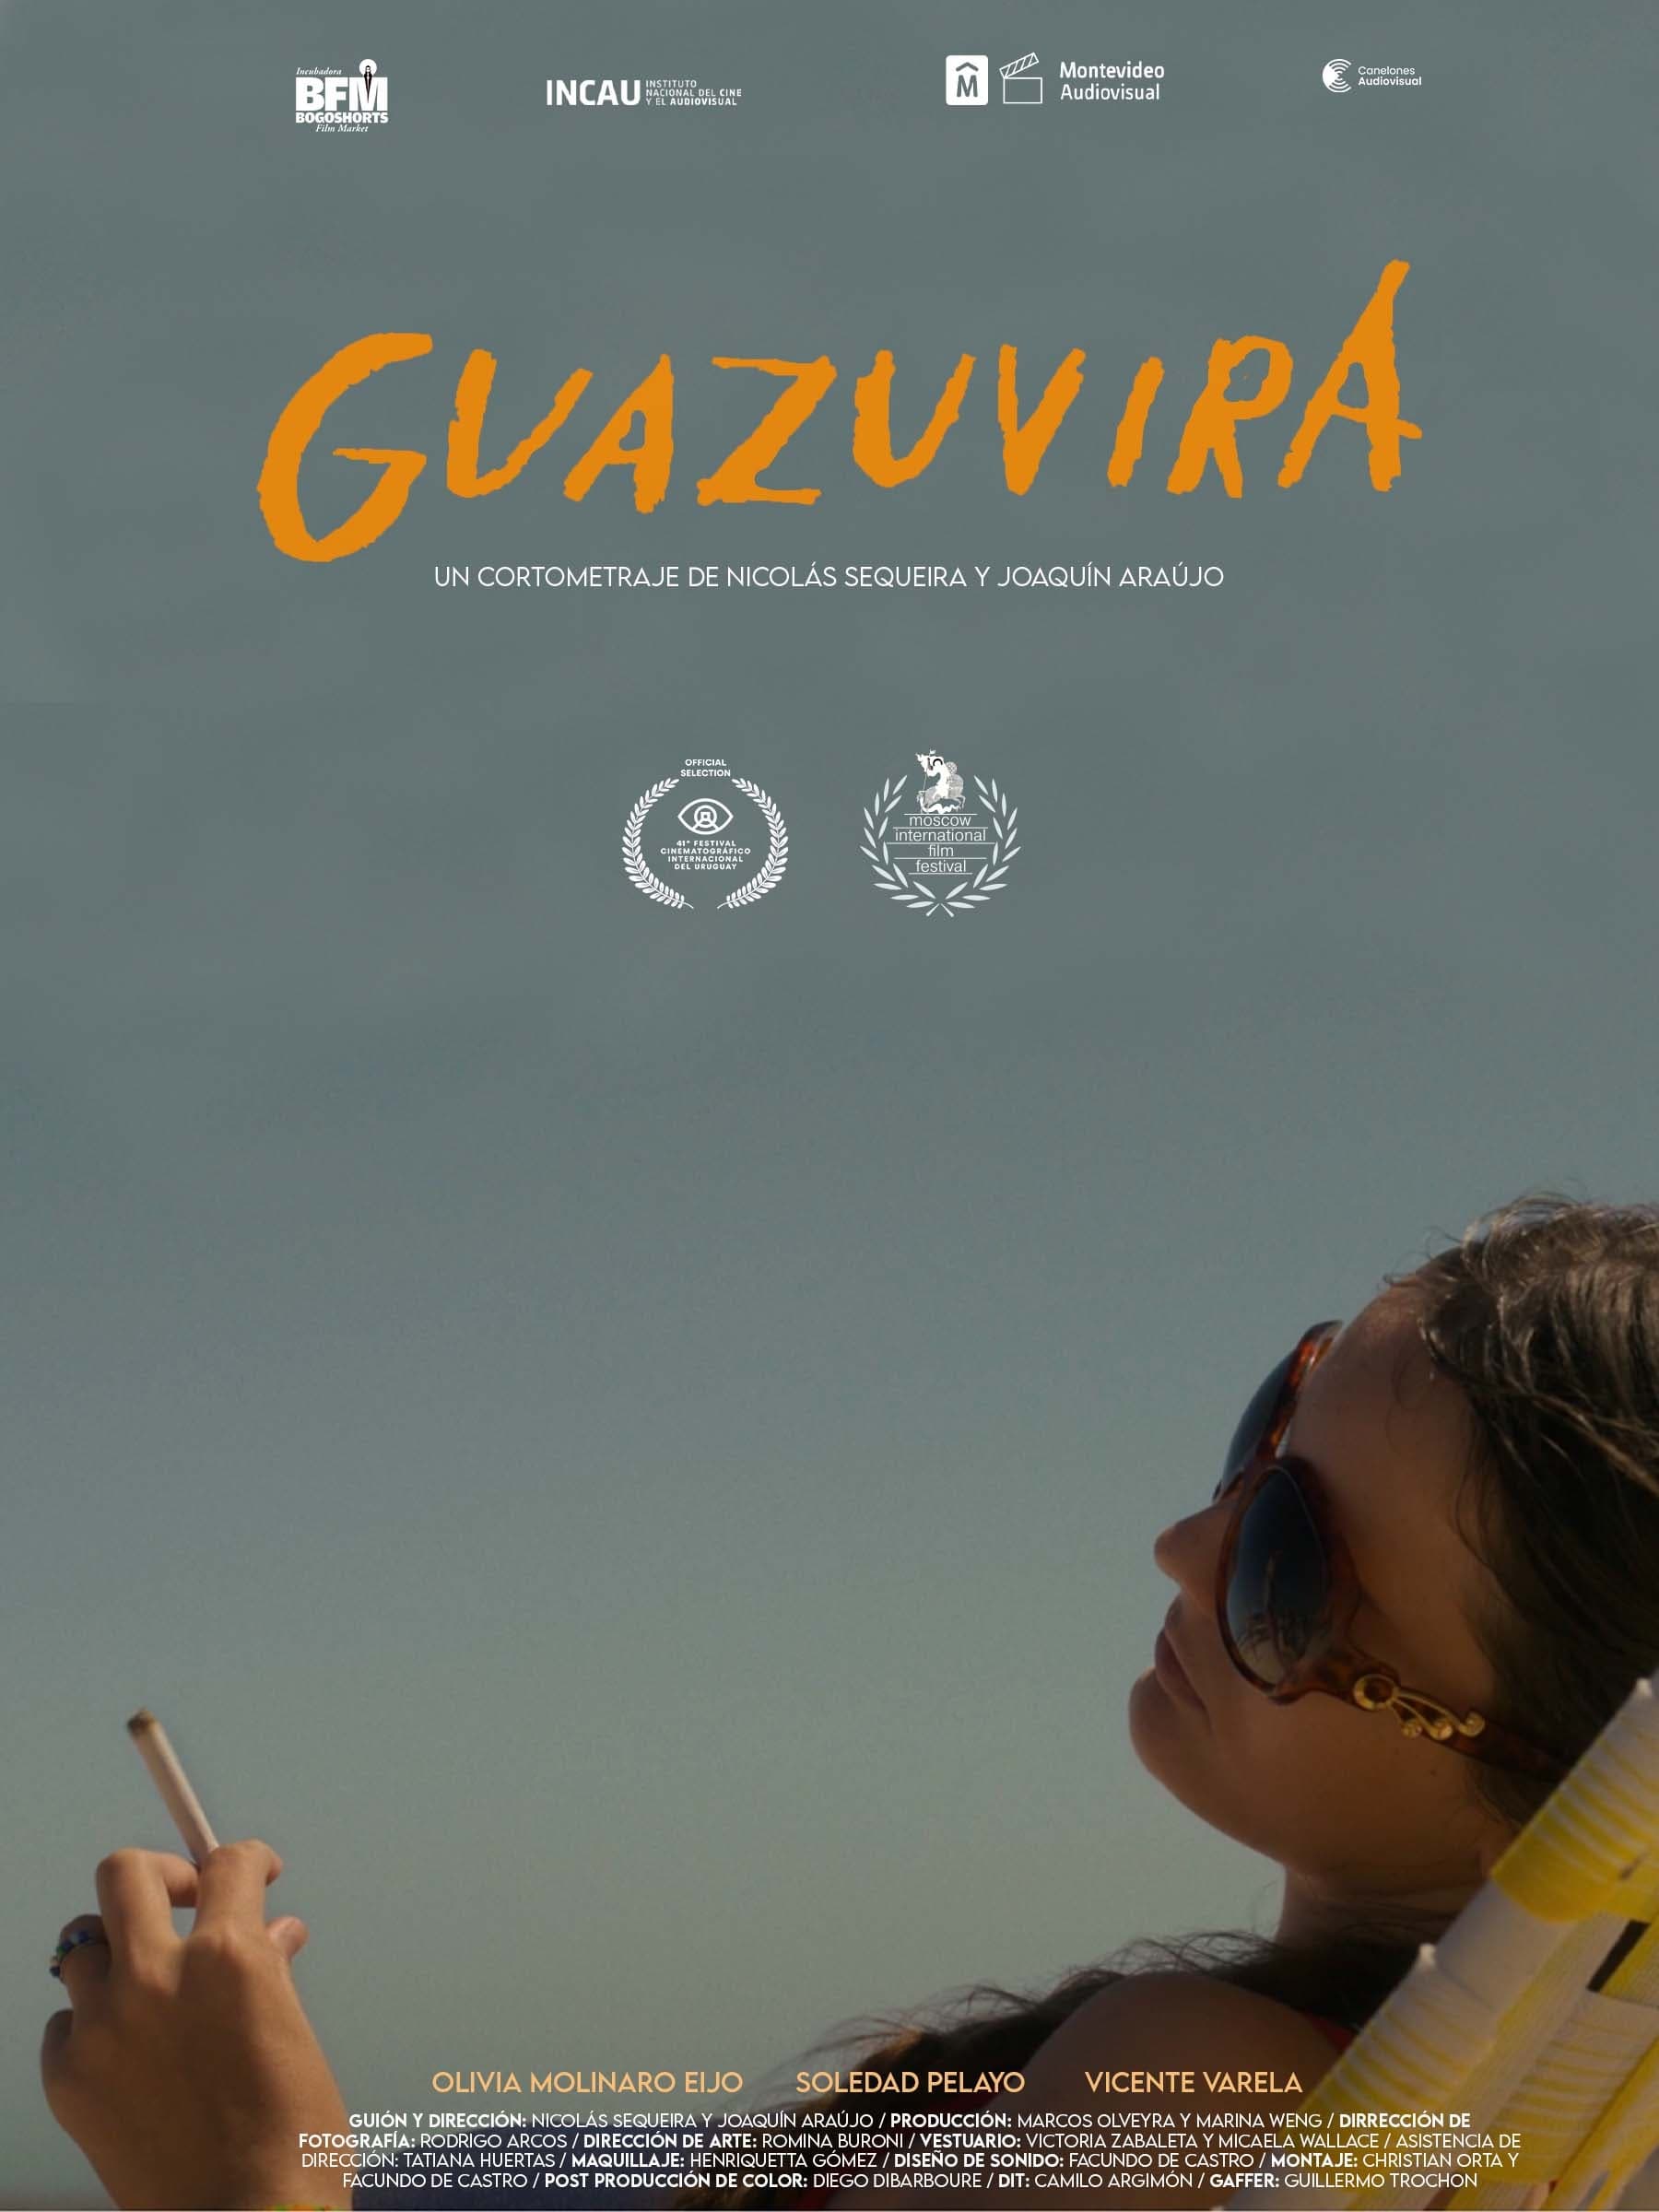 Guazuvirá